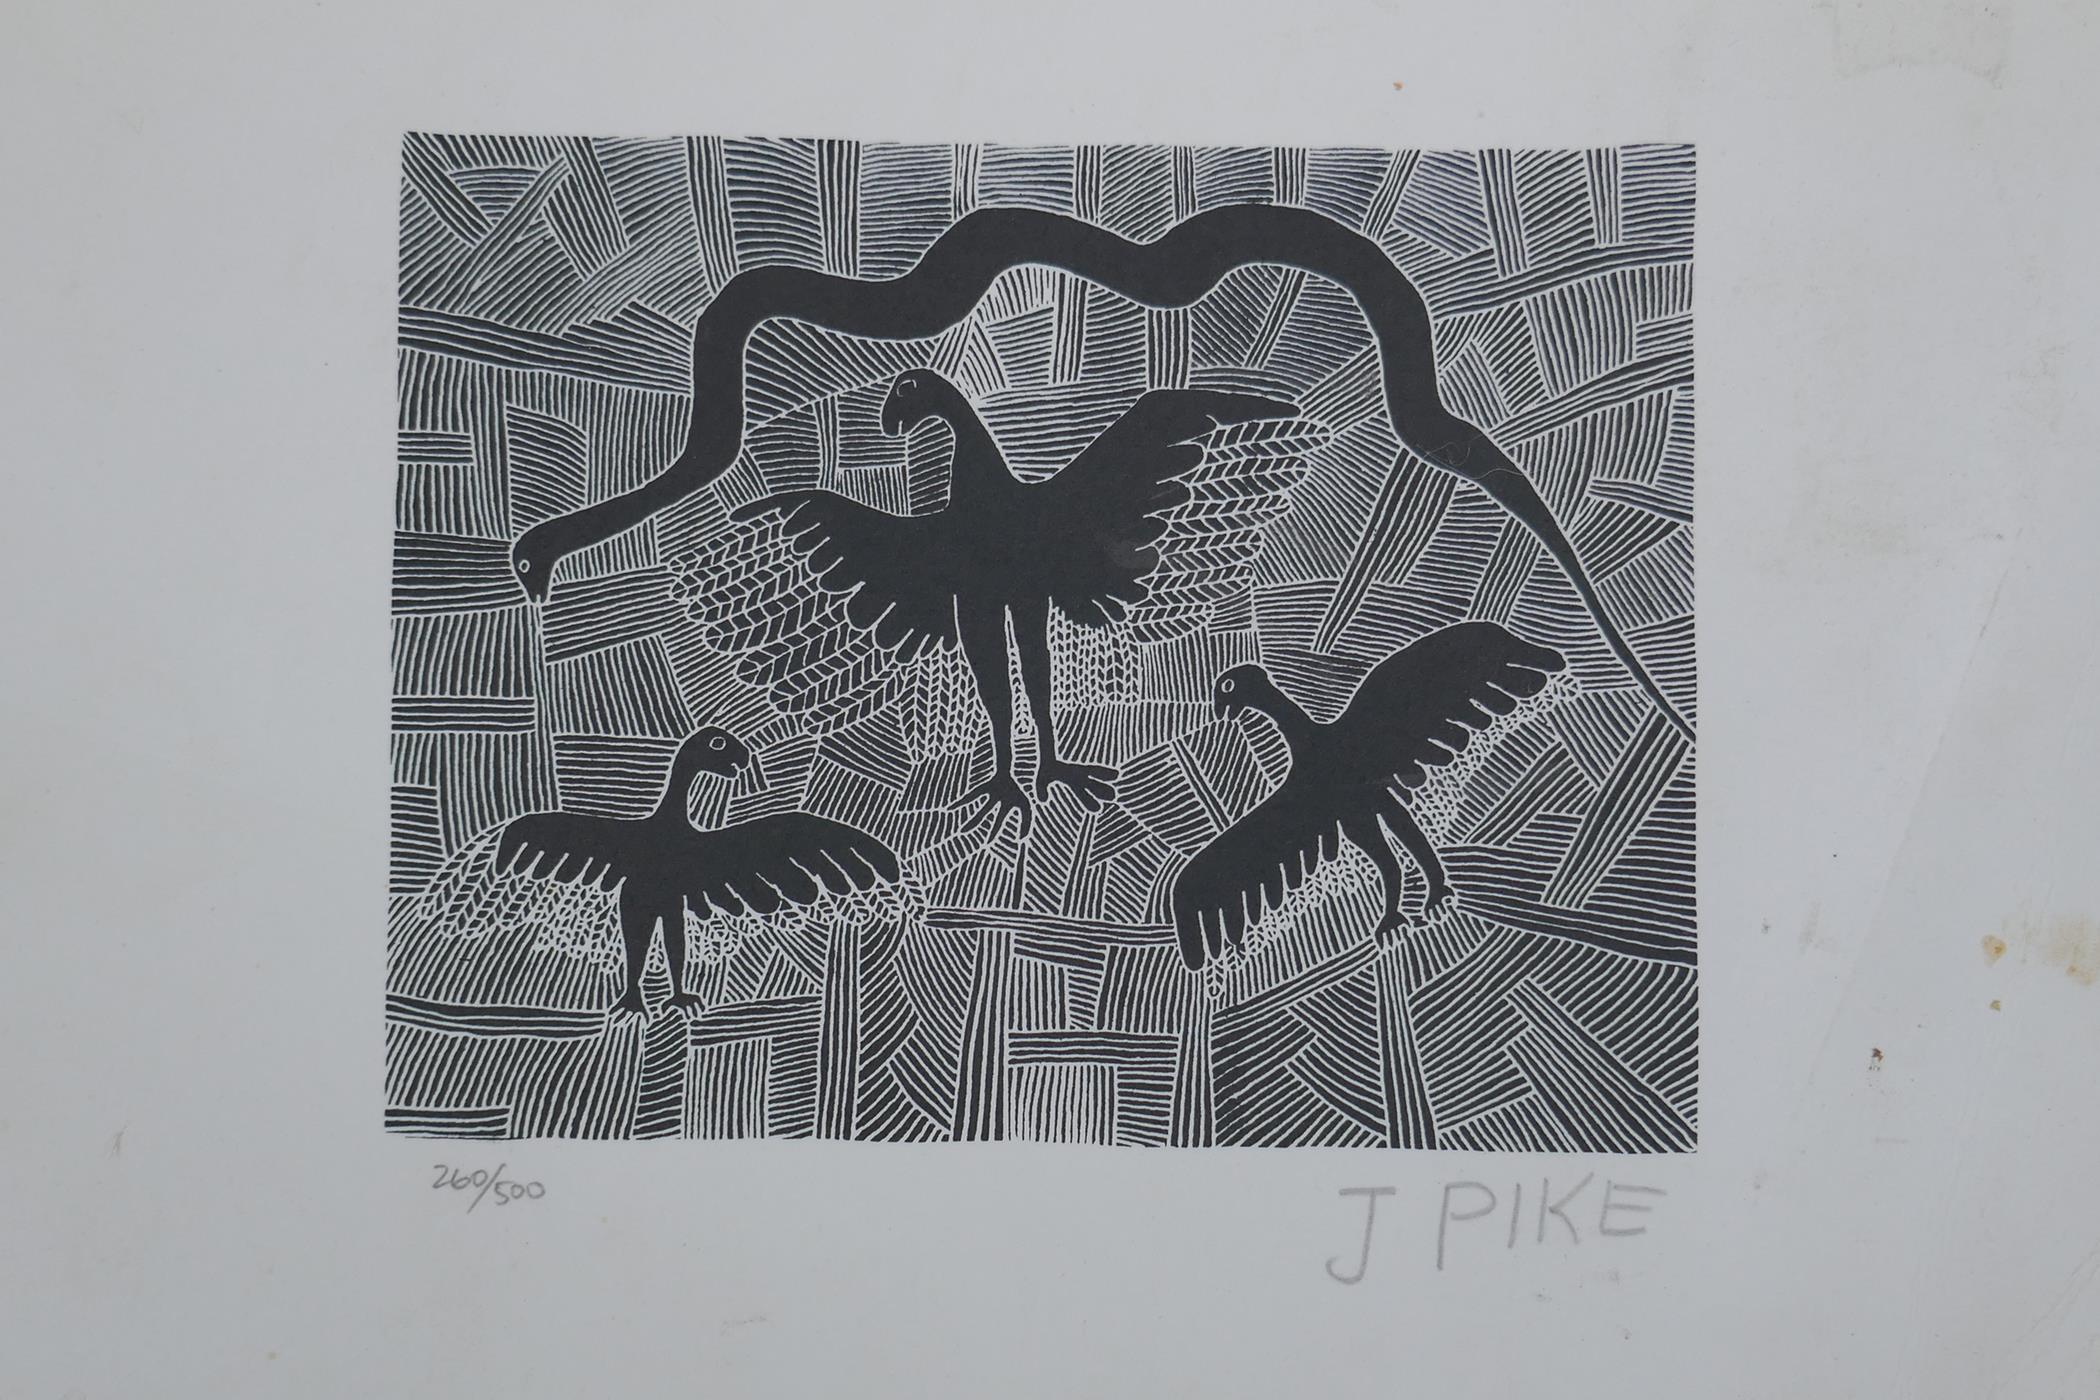 Jimmy Pike, (Australian, 1940-2002), Kirrkirr-Chicken hawk, limited edition screen print, 260/500, - Image 2 of 4